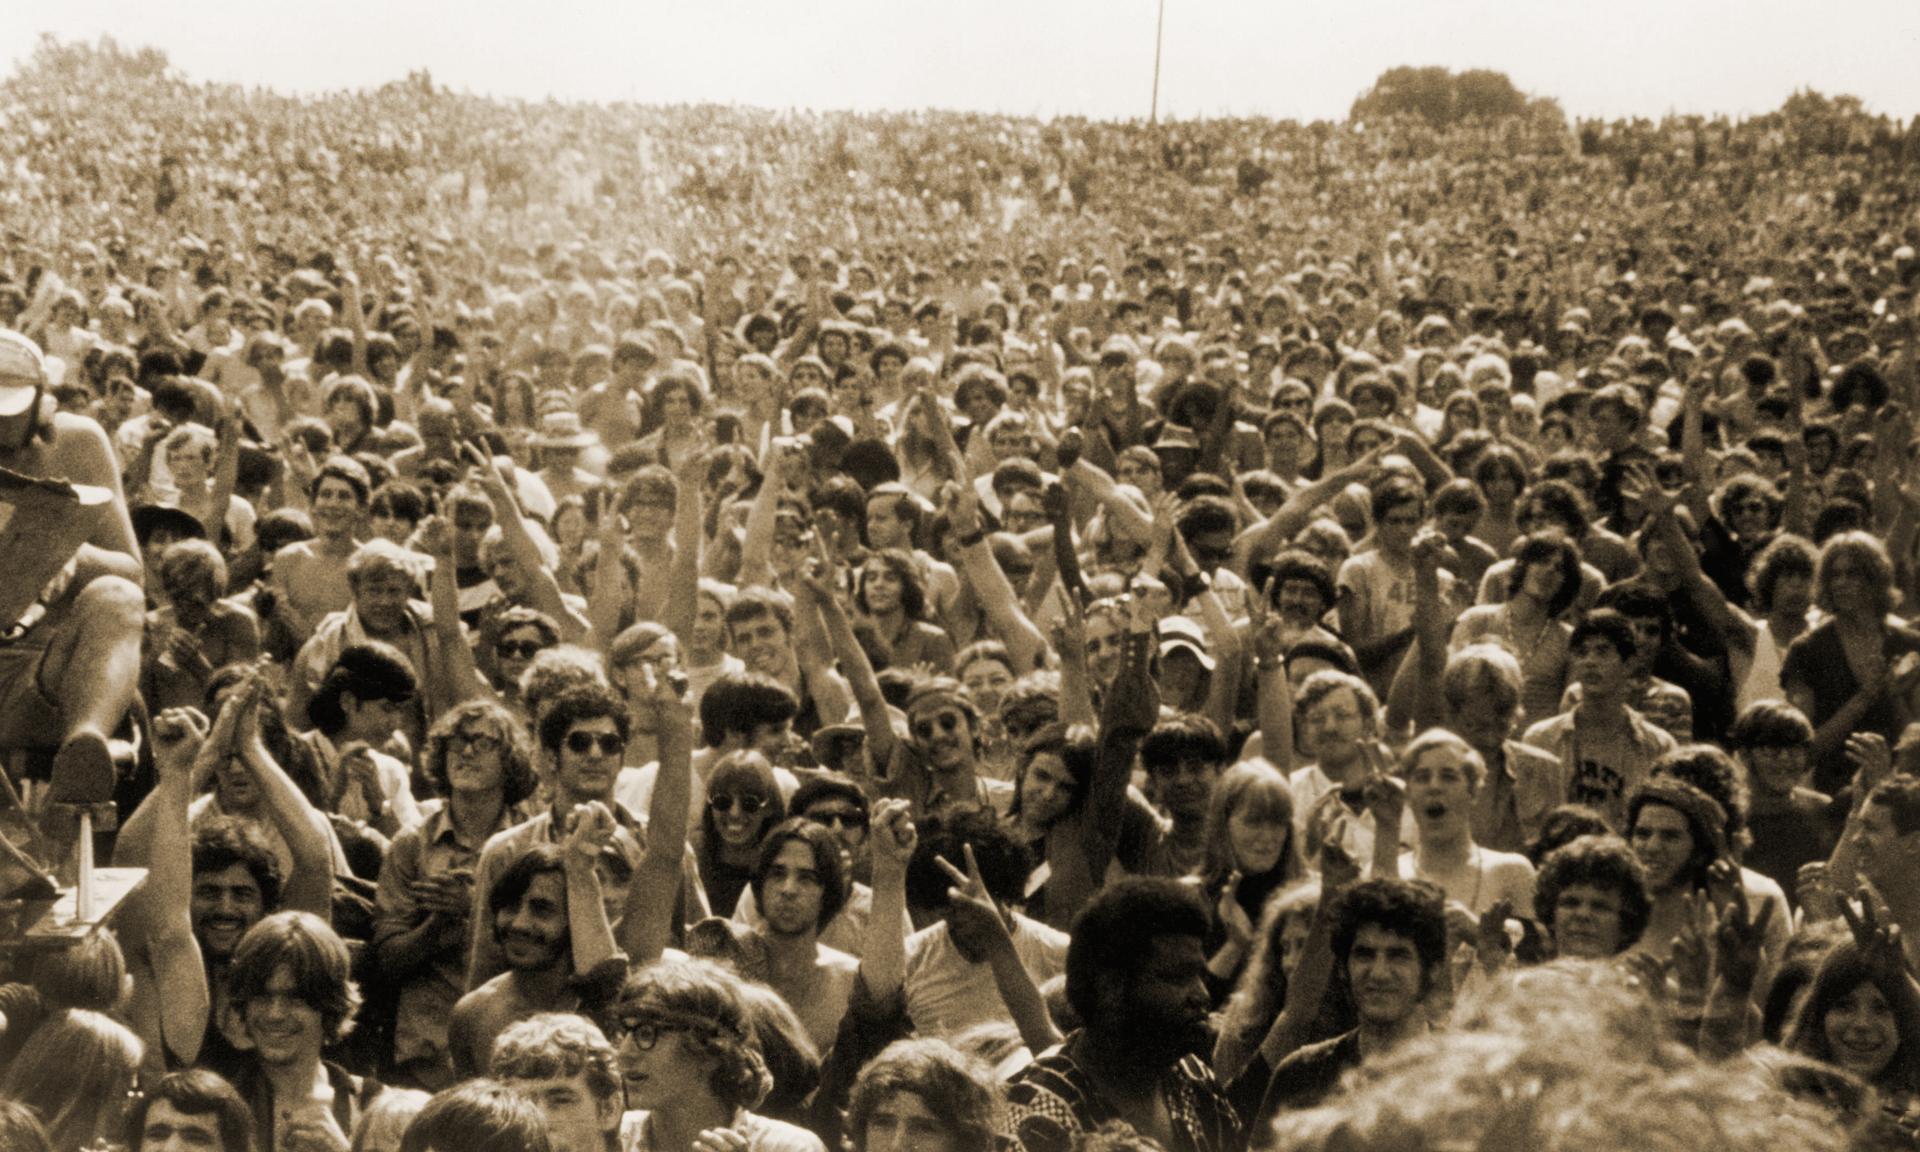 The Woodstock crowd, 1969.